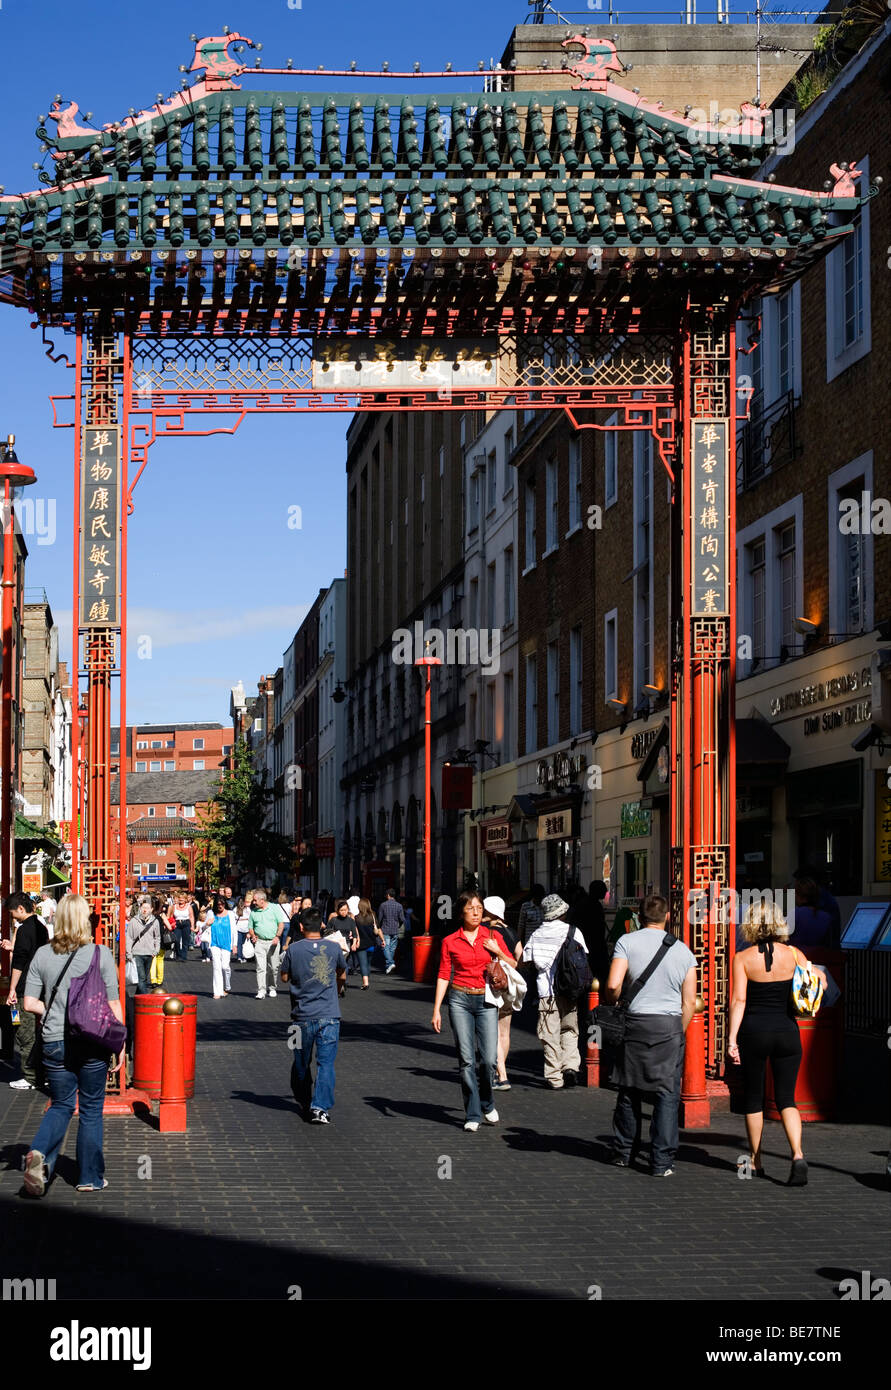 China Town Gates, Gerrard Street, London, England, UK, Europe Stock Photo